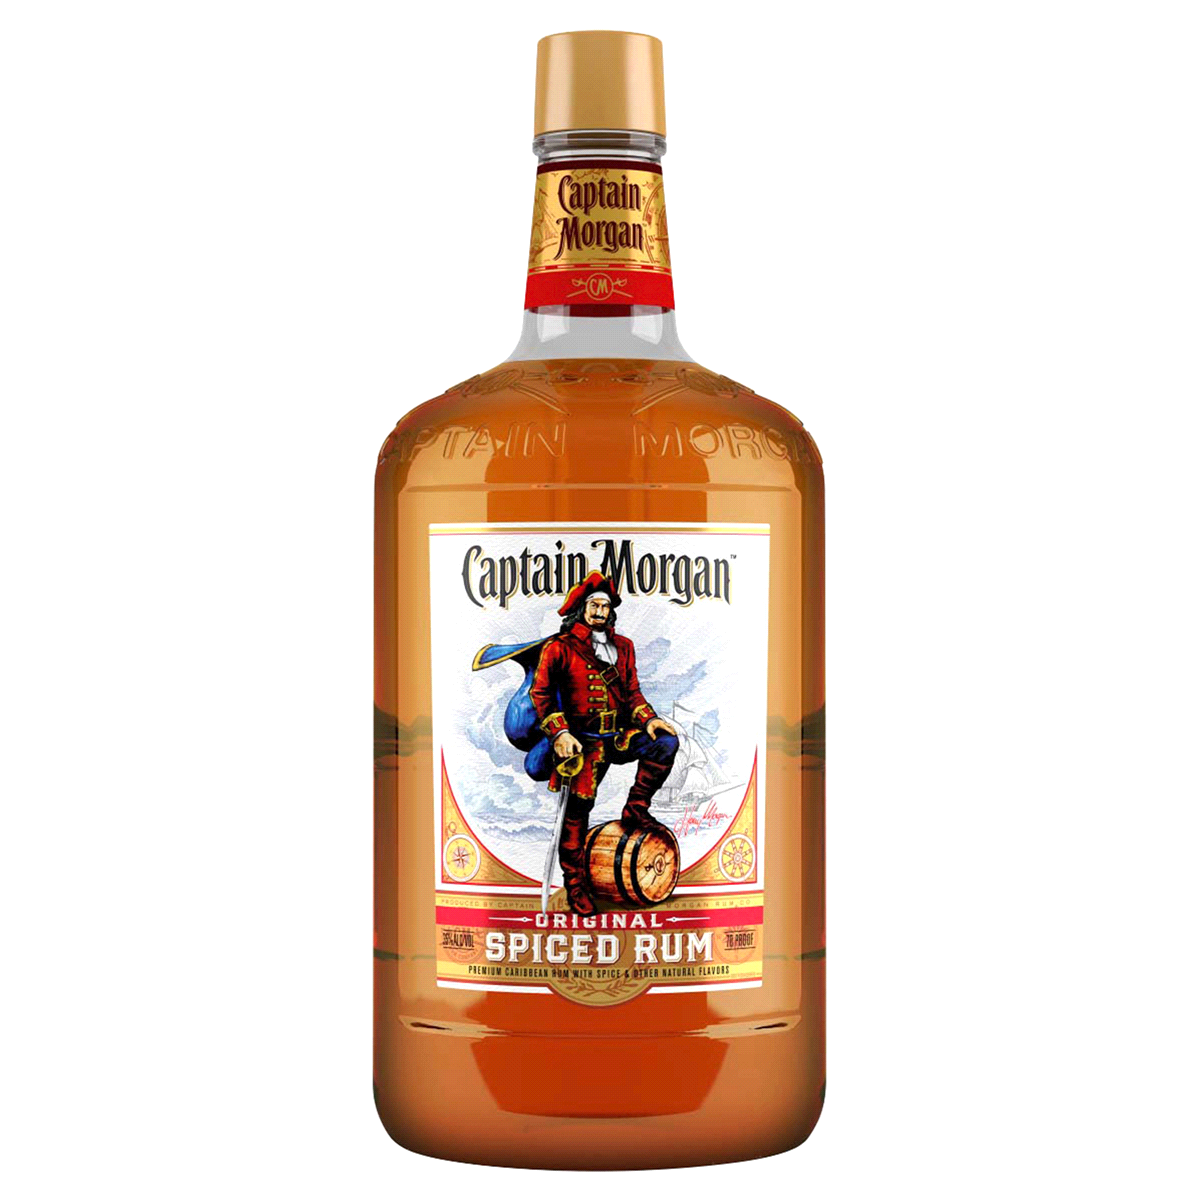 Captain Morgan Spiced Rum Captain Morgan Rum